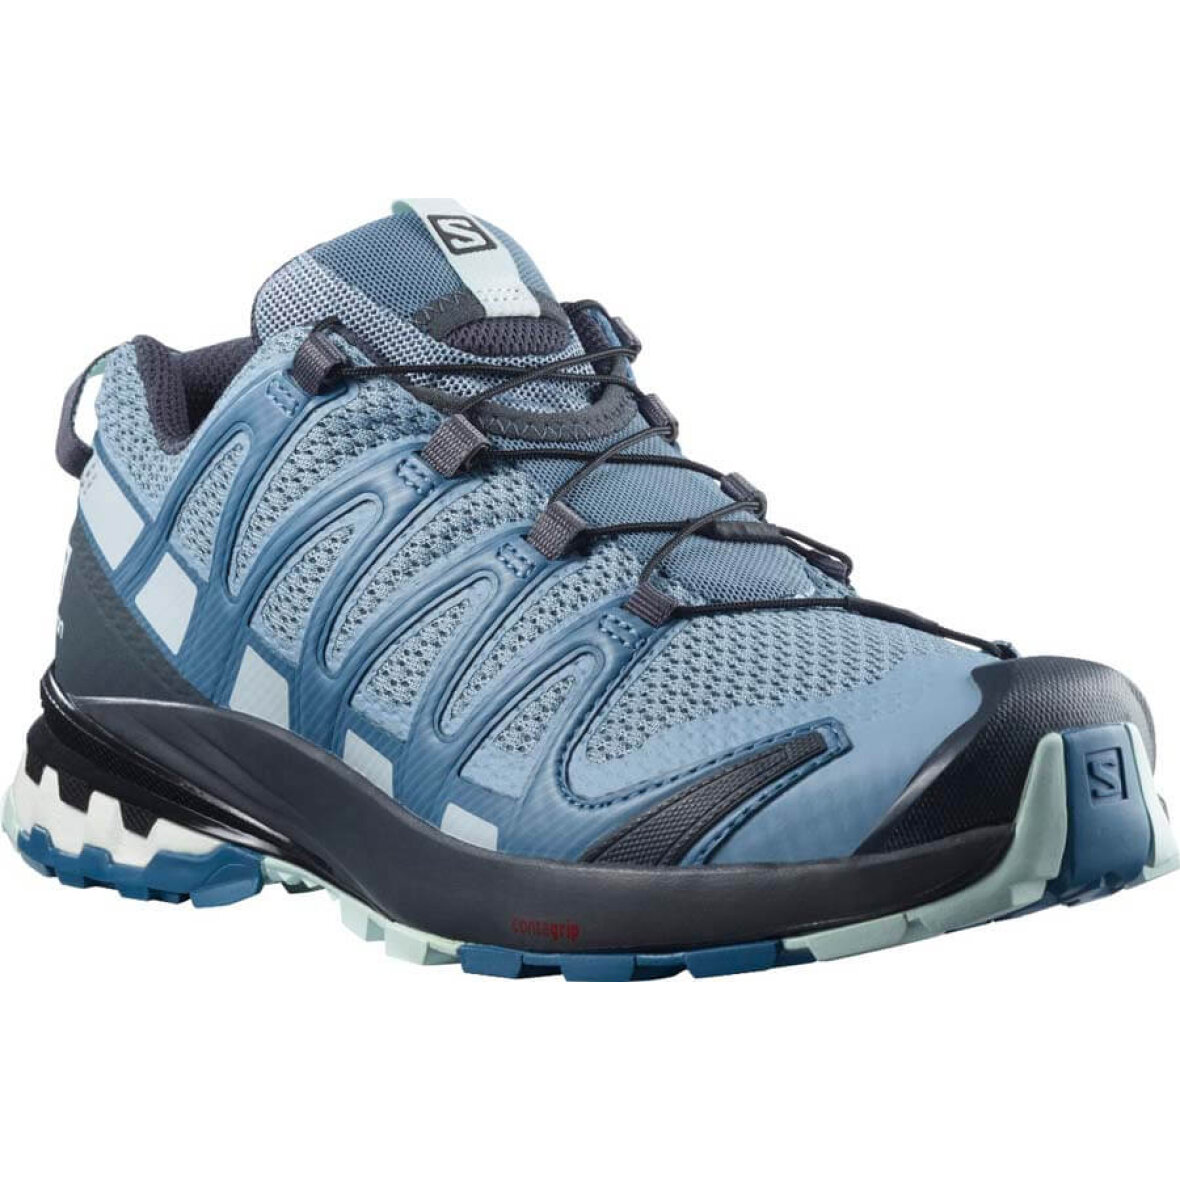 XA PRO 3D W ASHLEY BLUE - Legendarisk sko - Køb dem her!